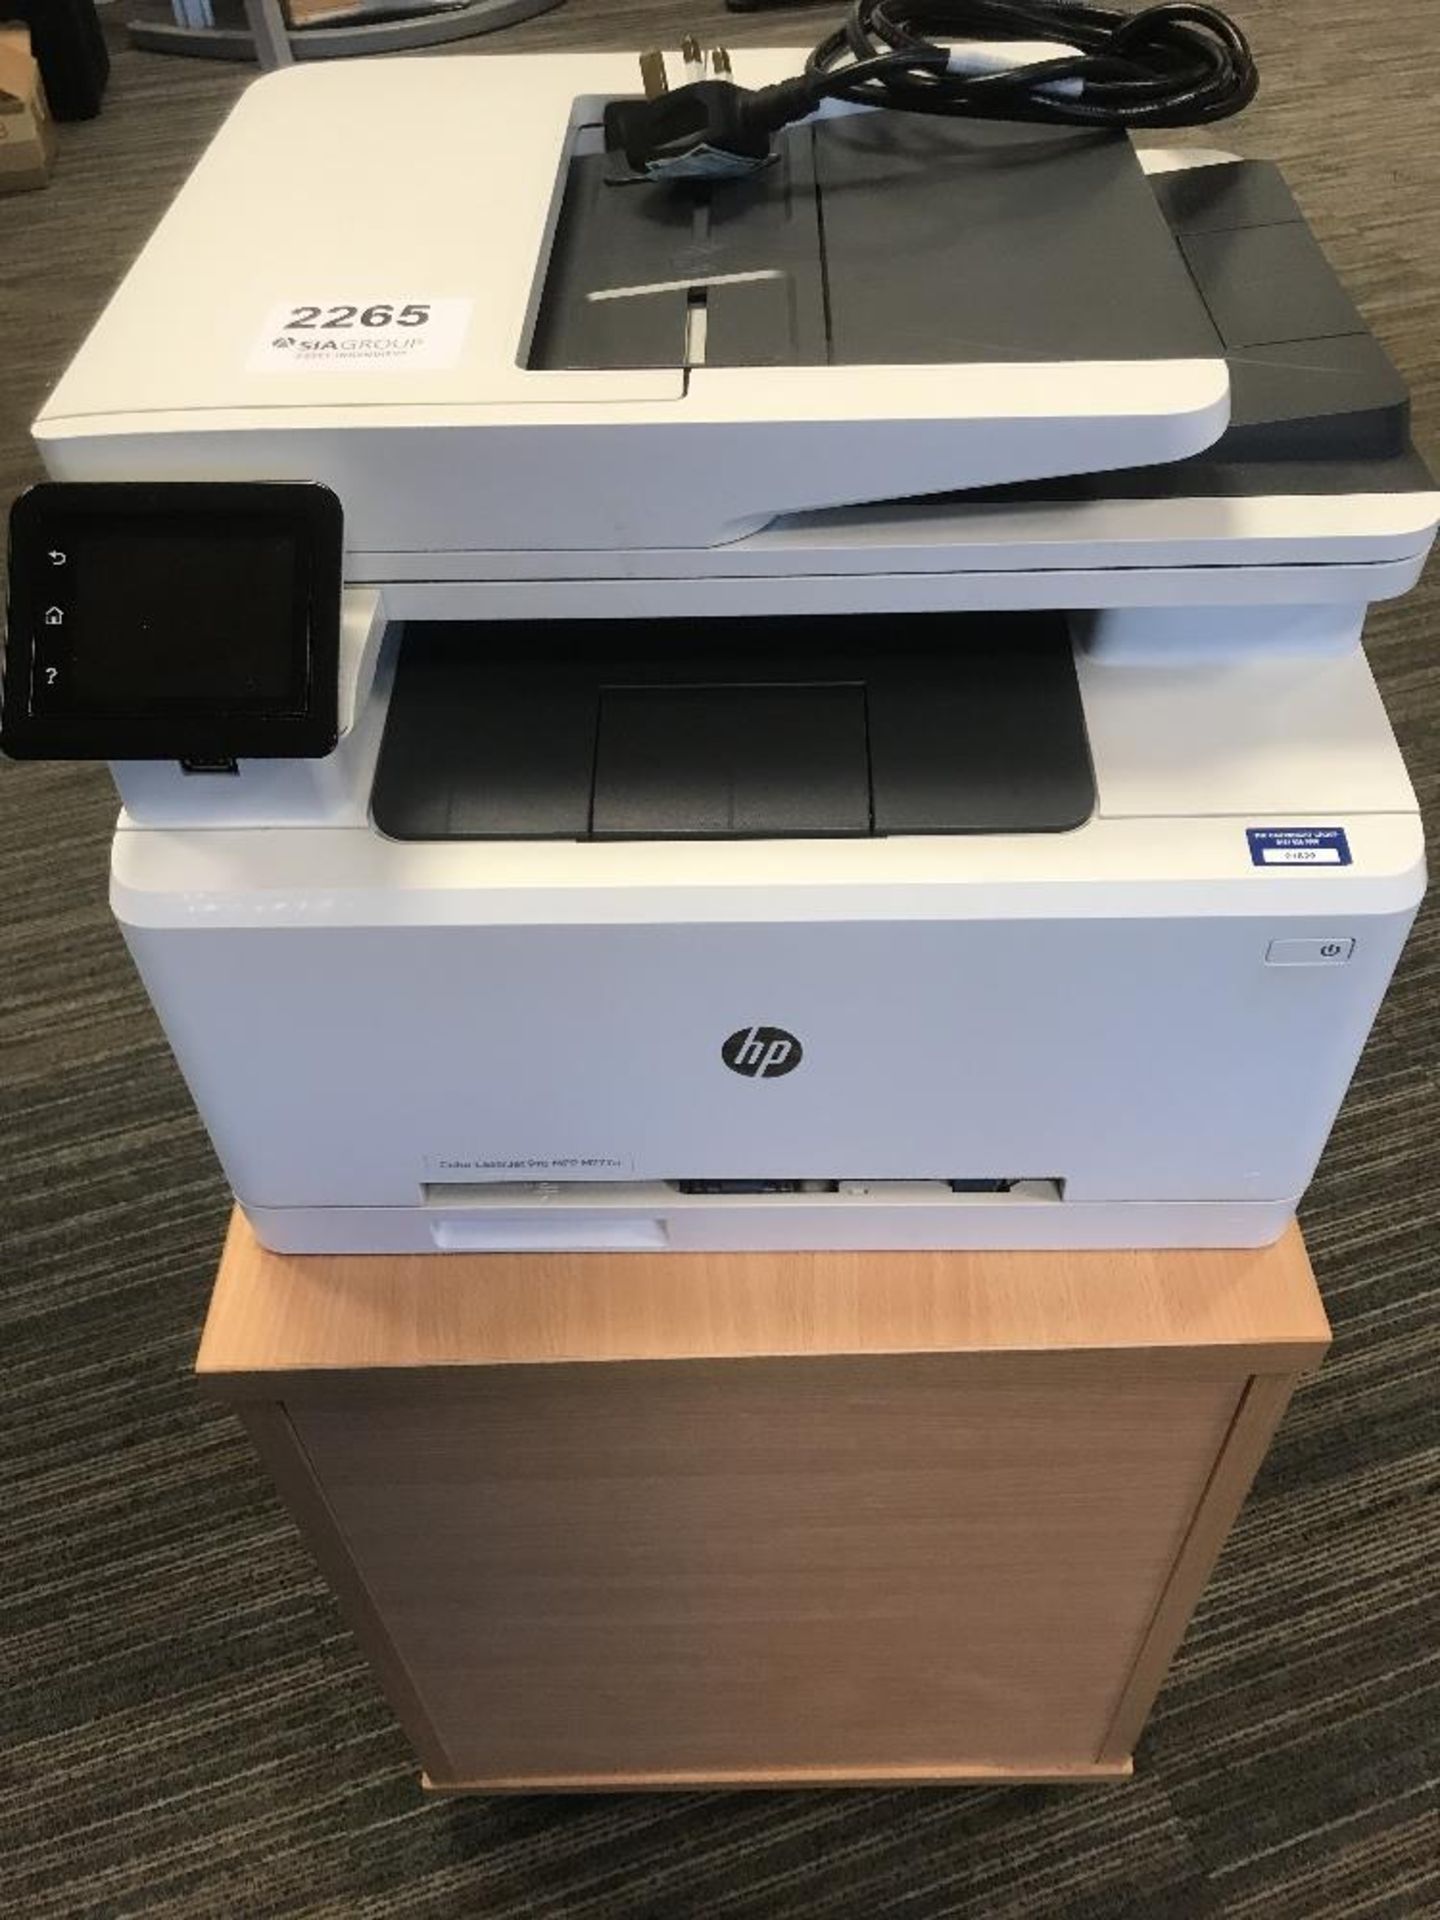 HP MFP M277n Colour LaserJet Pro Printer